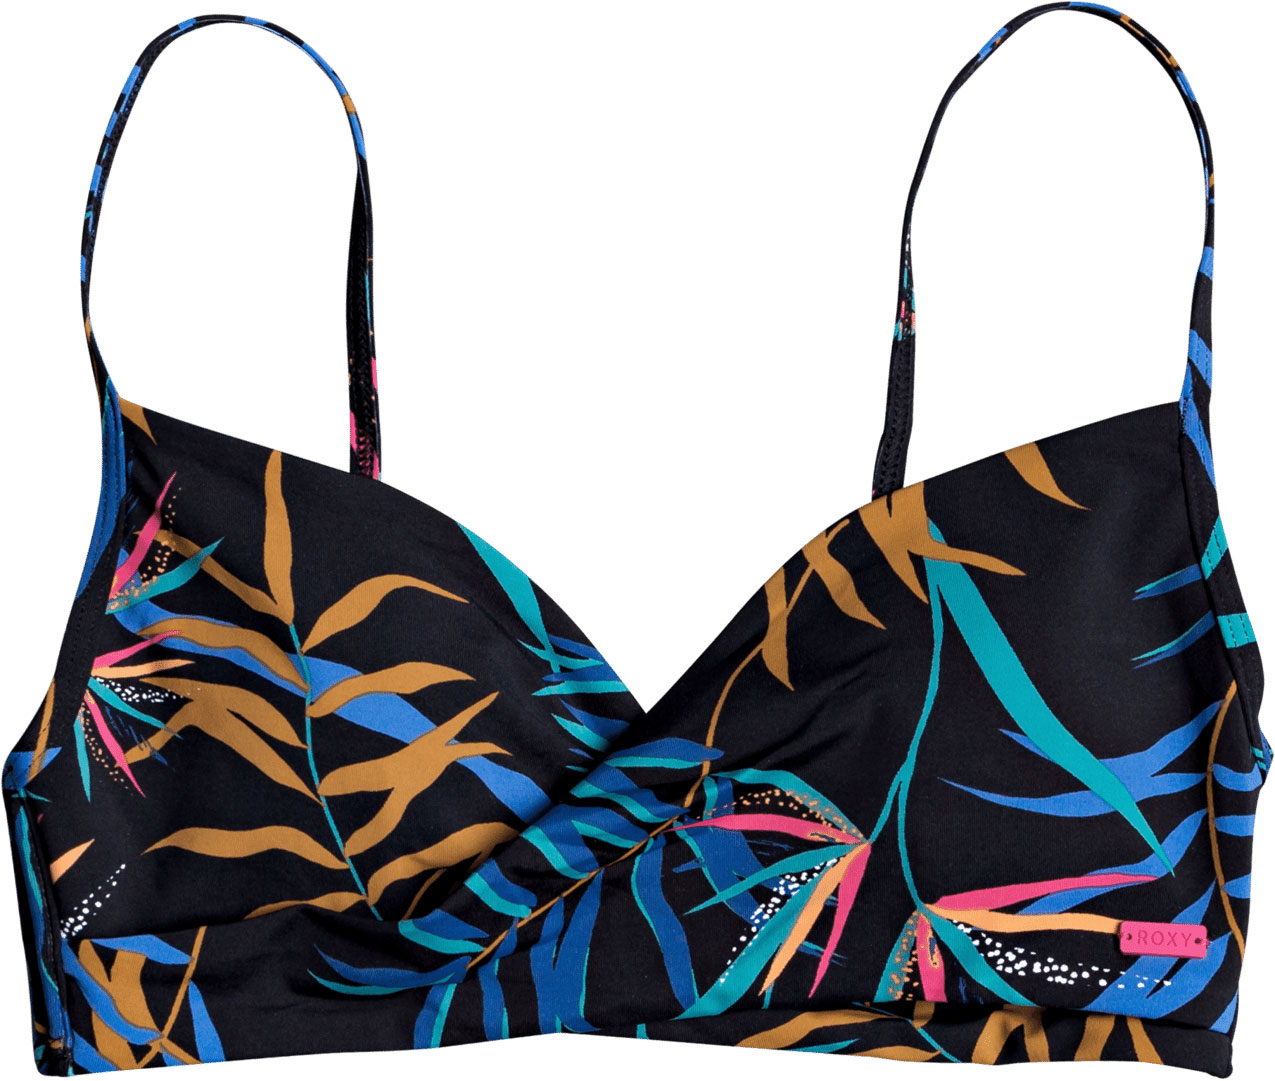 Lahaina Bay - Wrap Bra Bikini Top